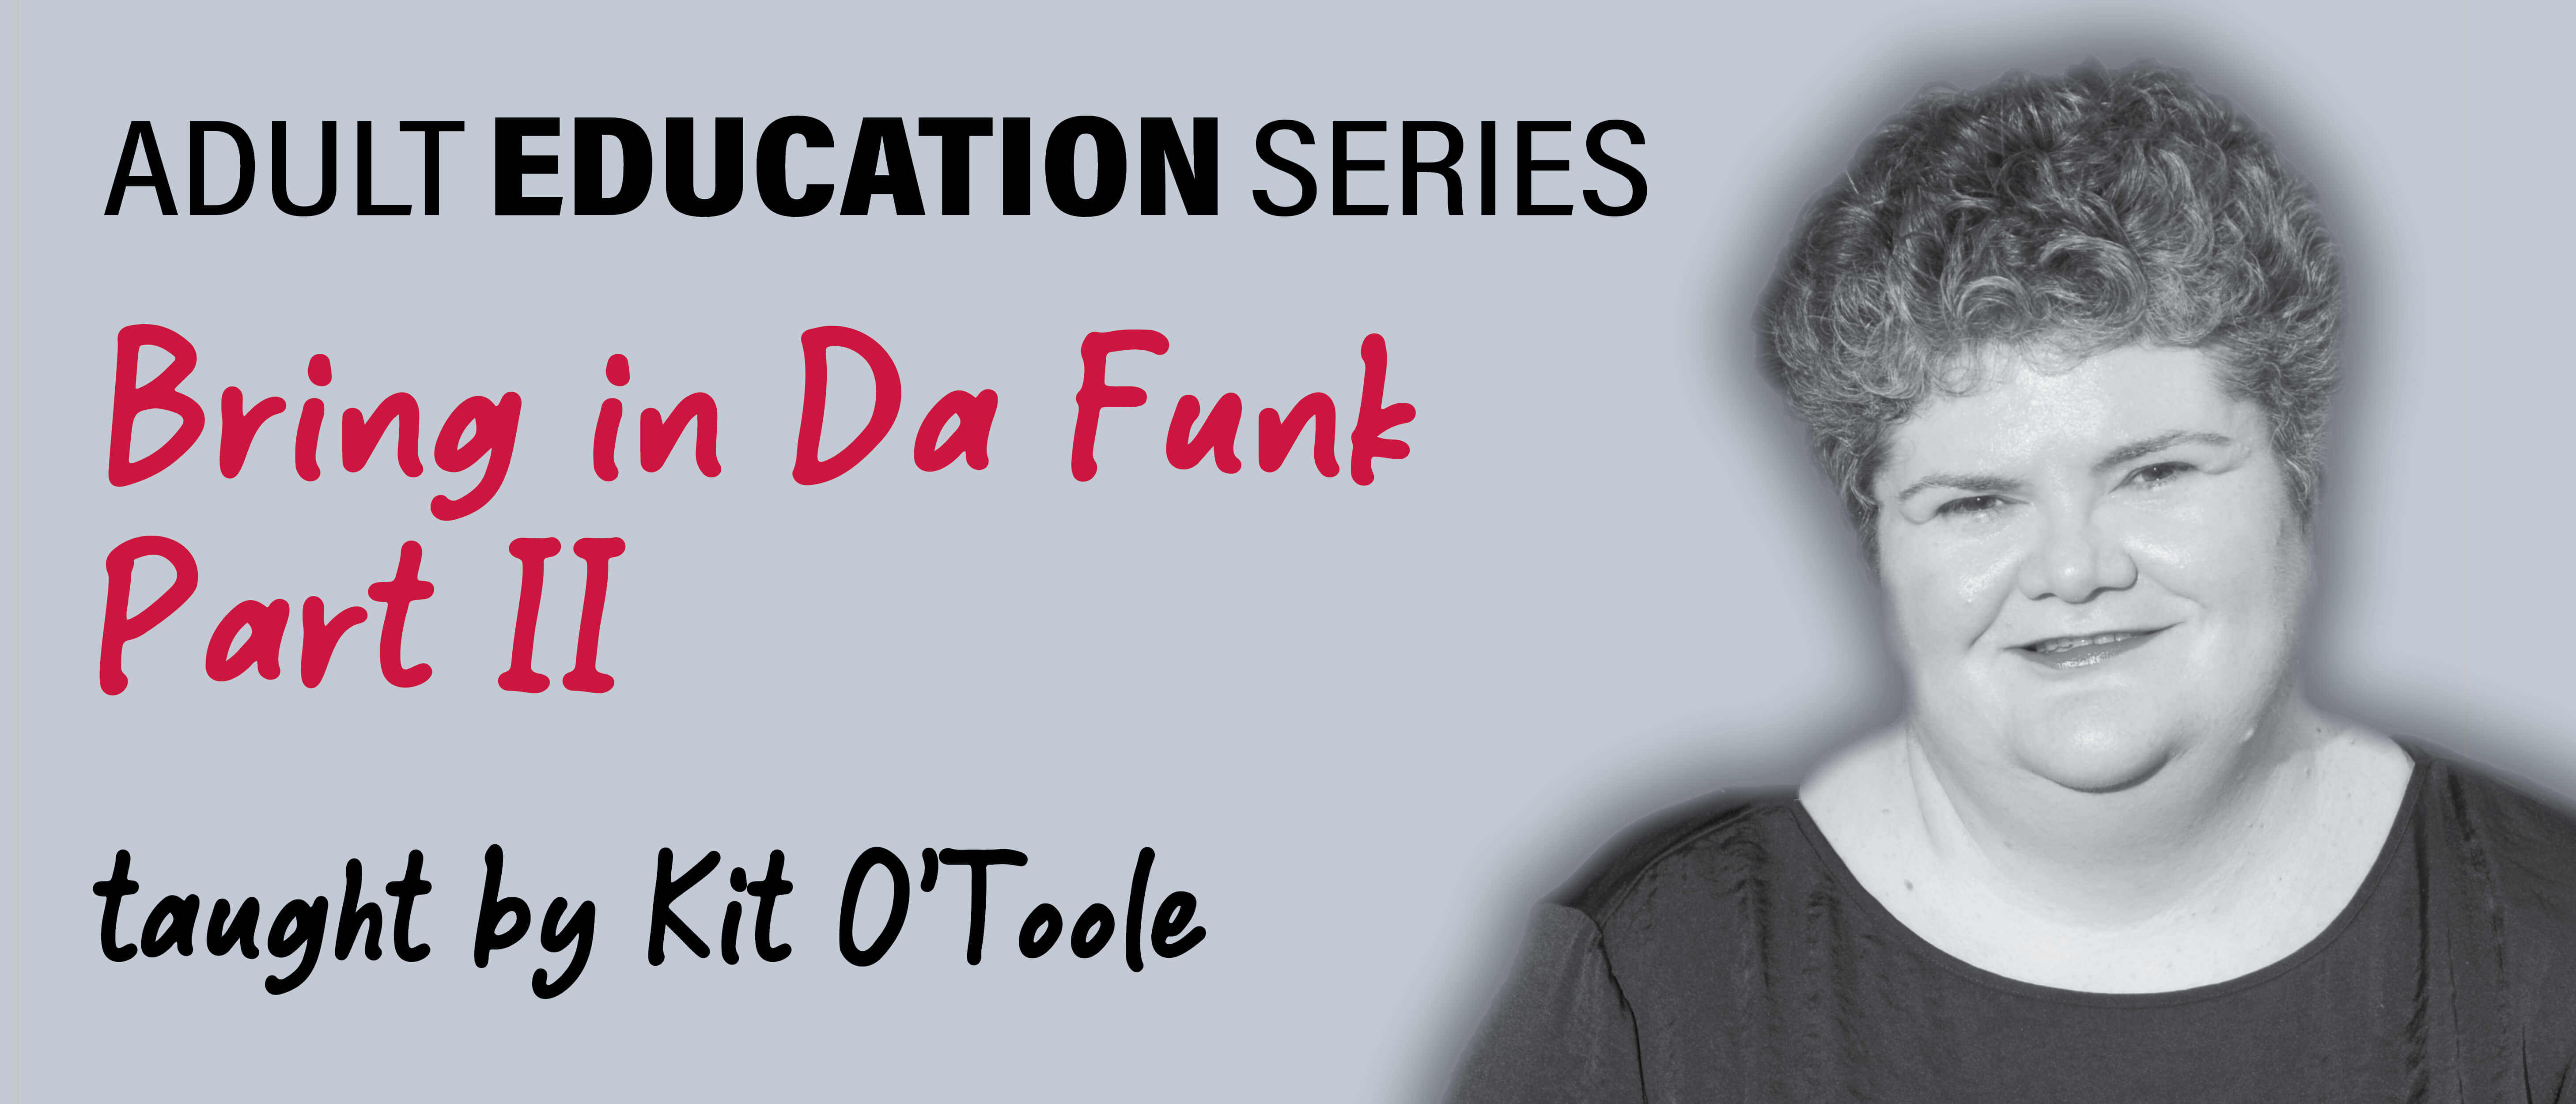 Adult Education Series: Bring in Da Funk, Part II Kit O’Toole